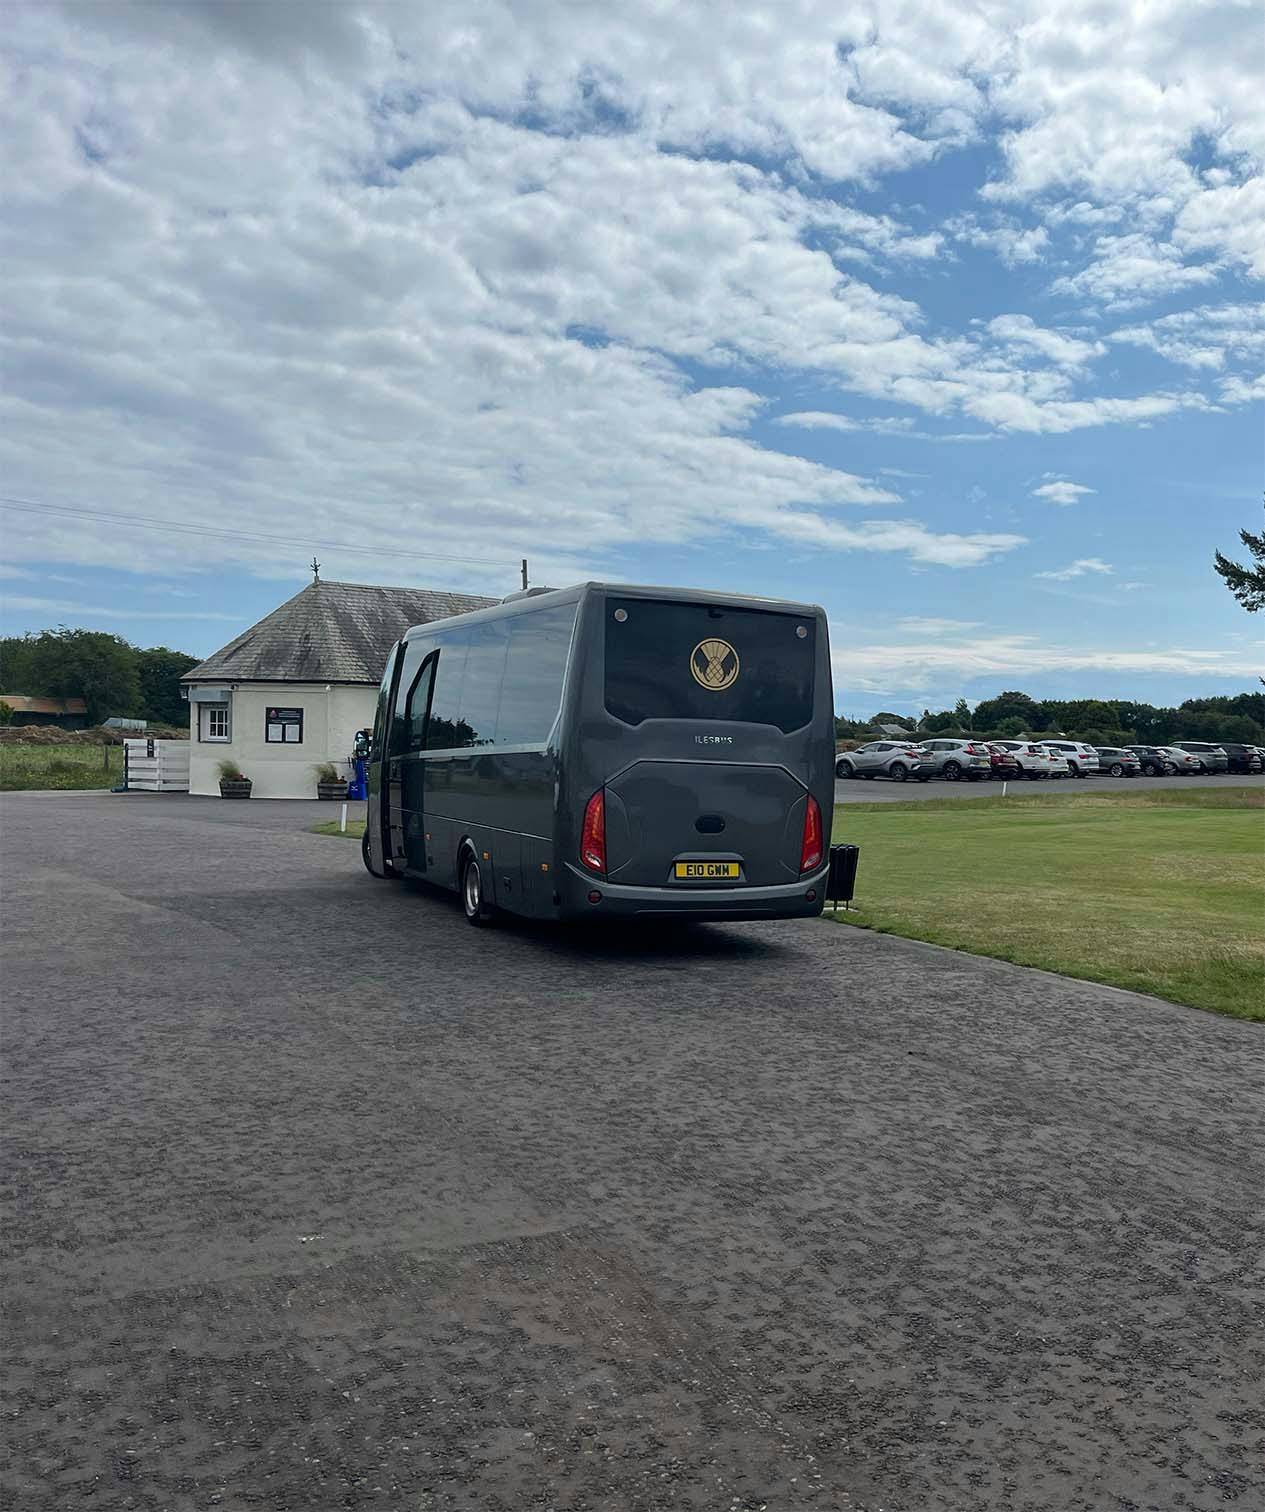 Van next to another golf course